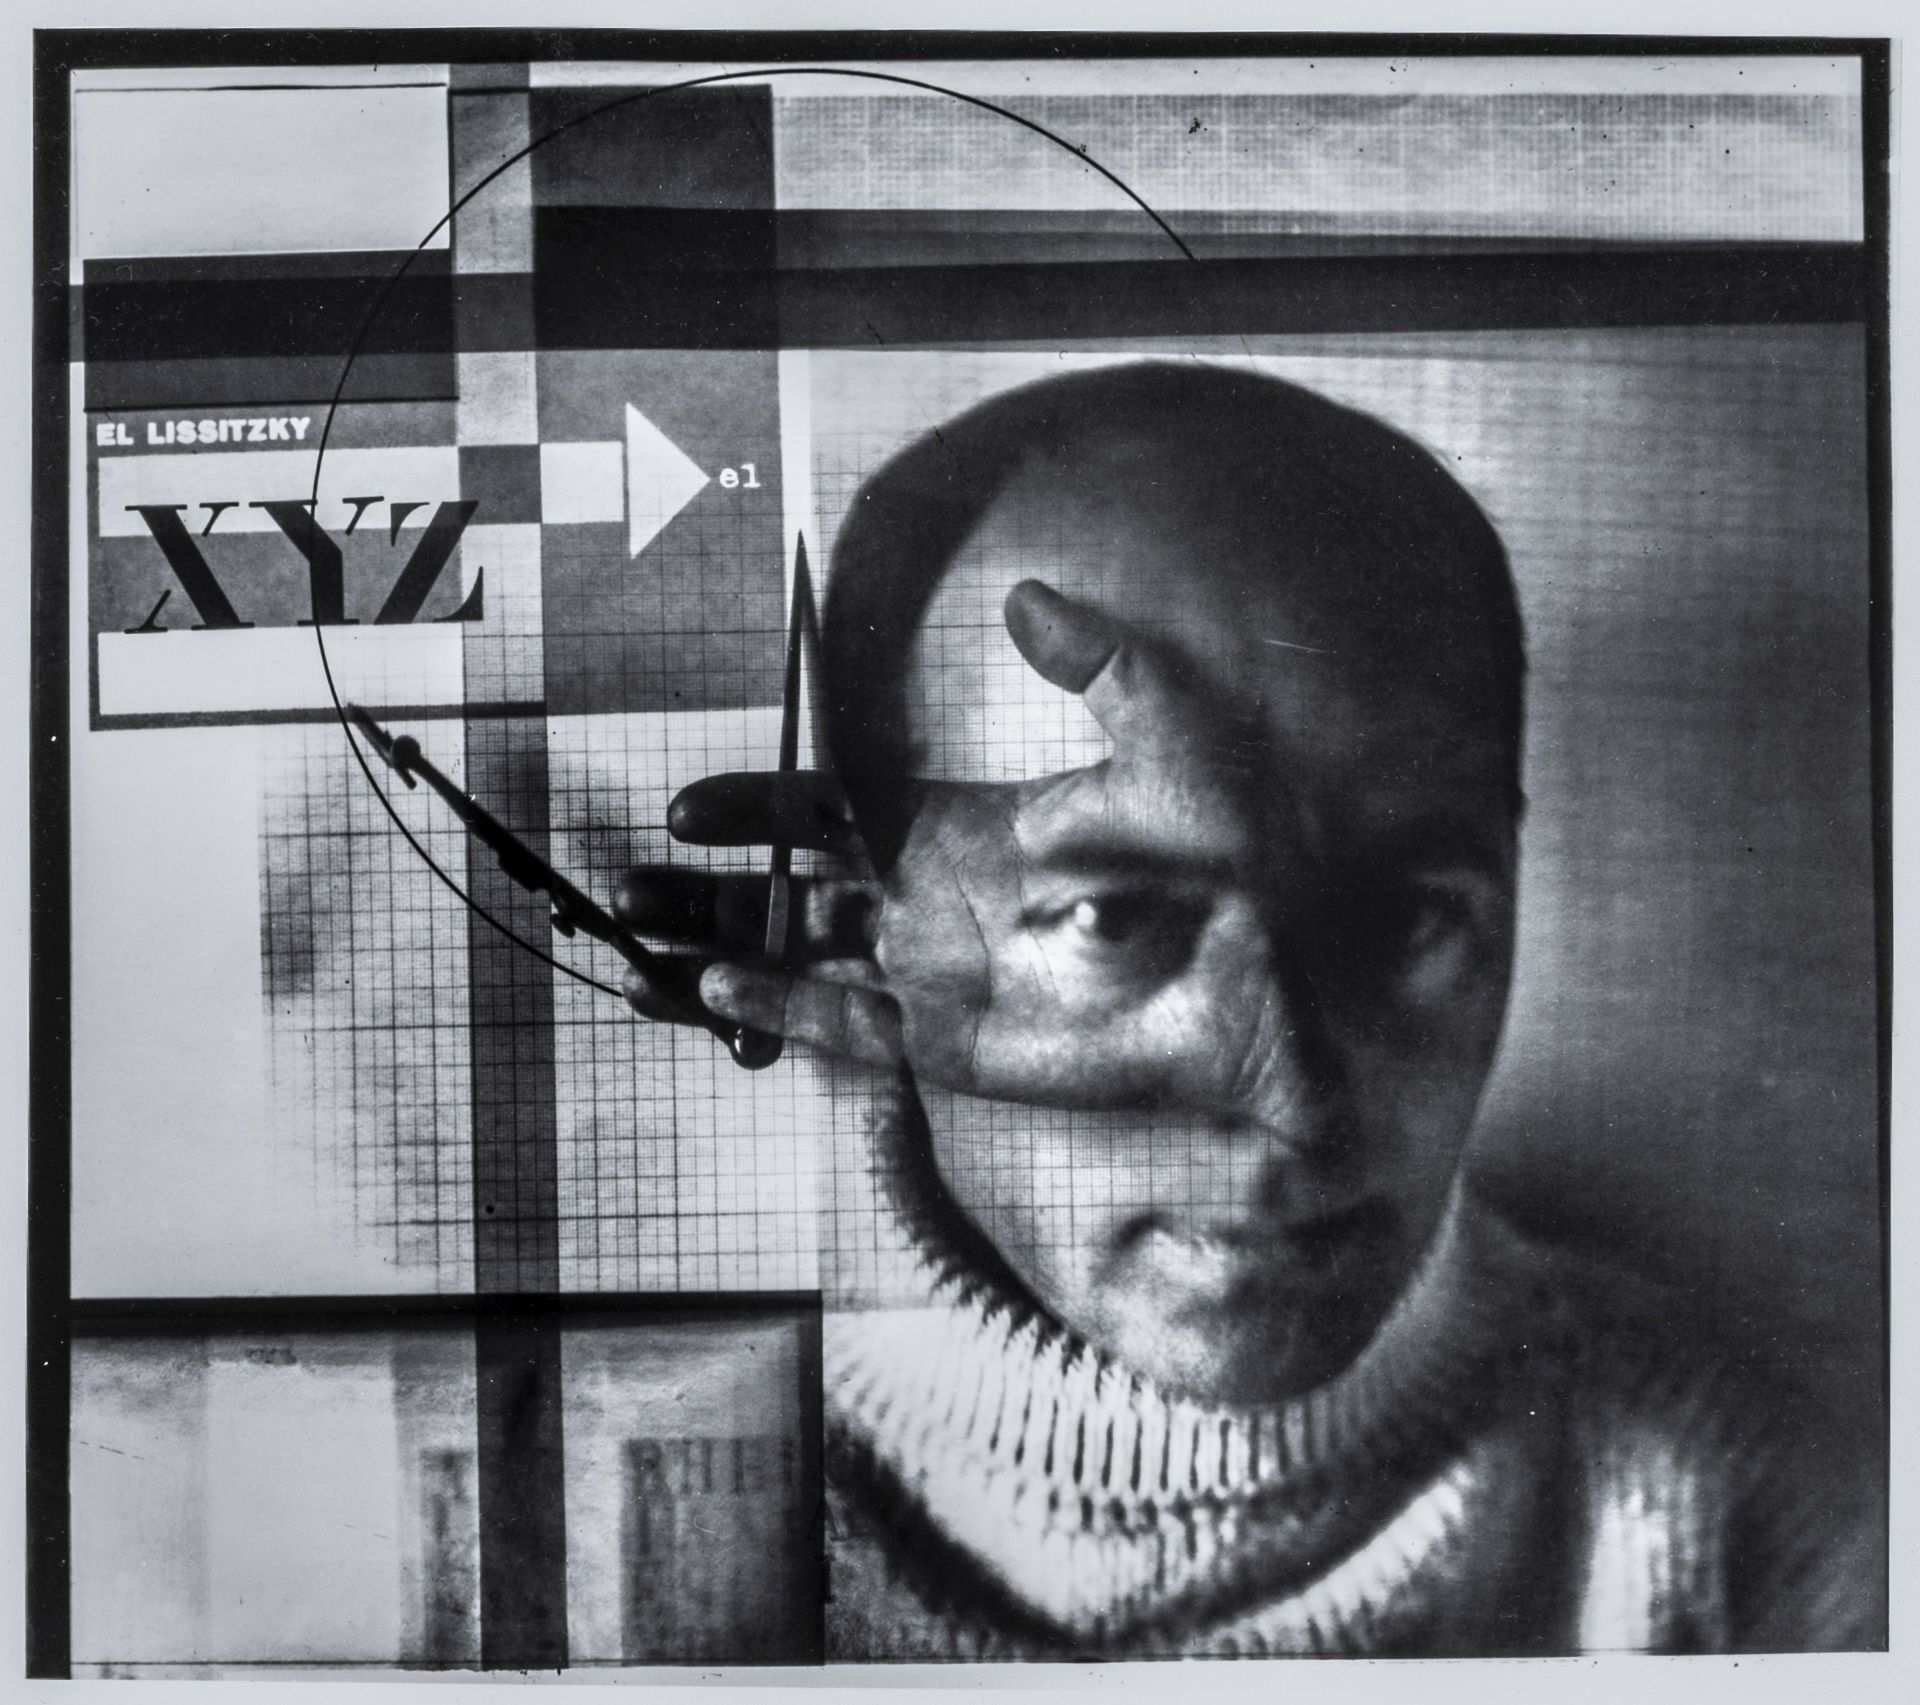 Lissitzky, El. Vier - Bild 2 aus 6